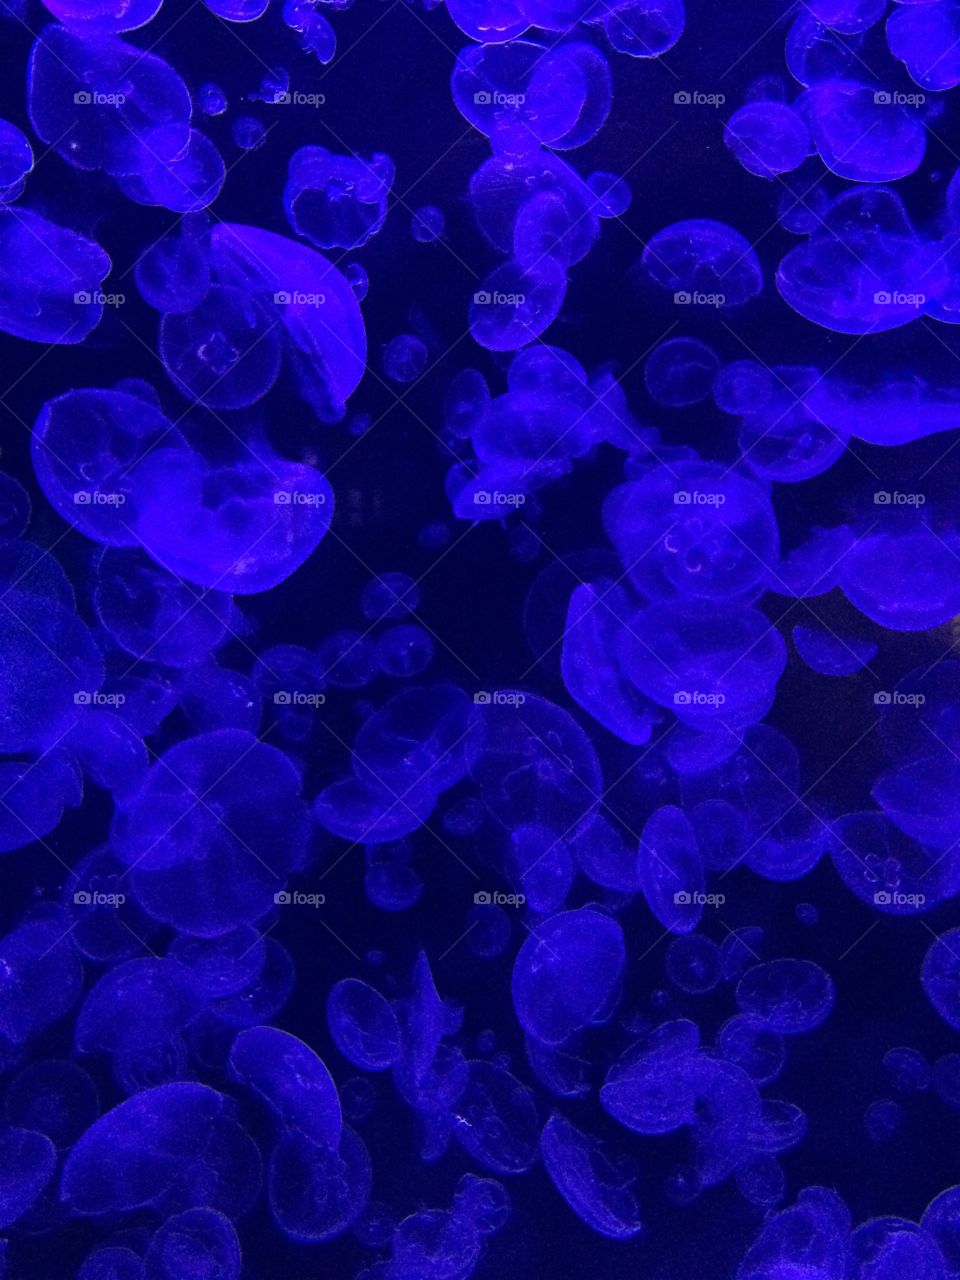 Up close jelly fish 